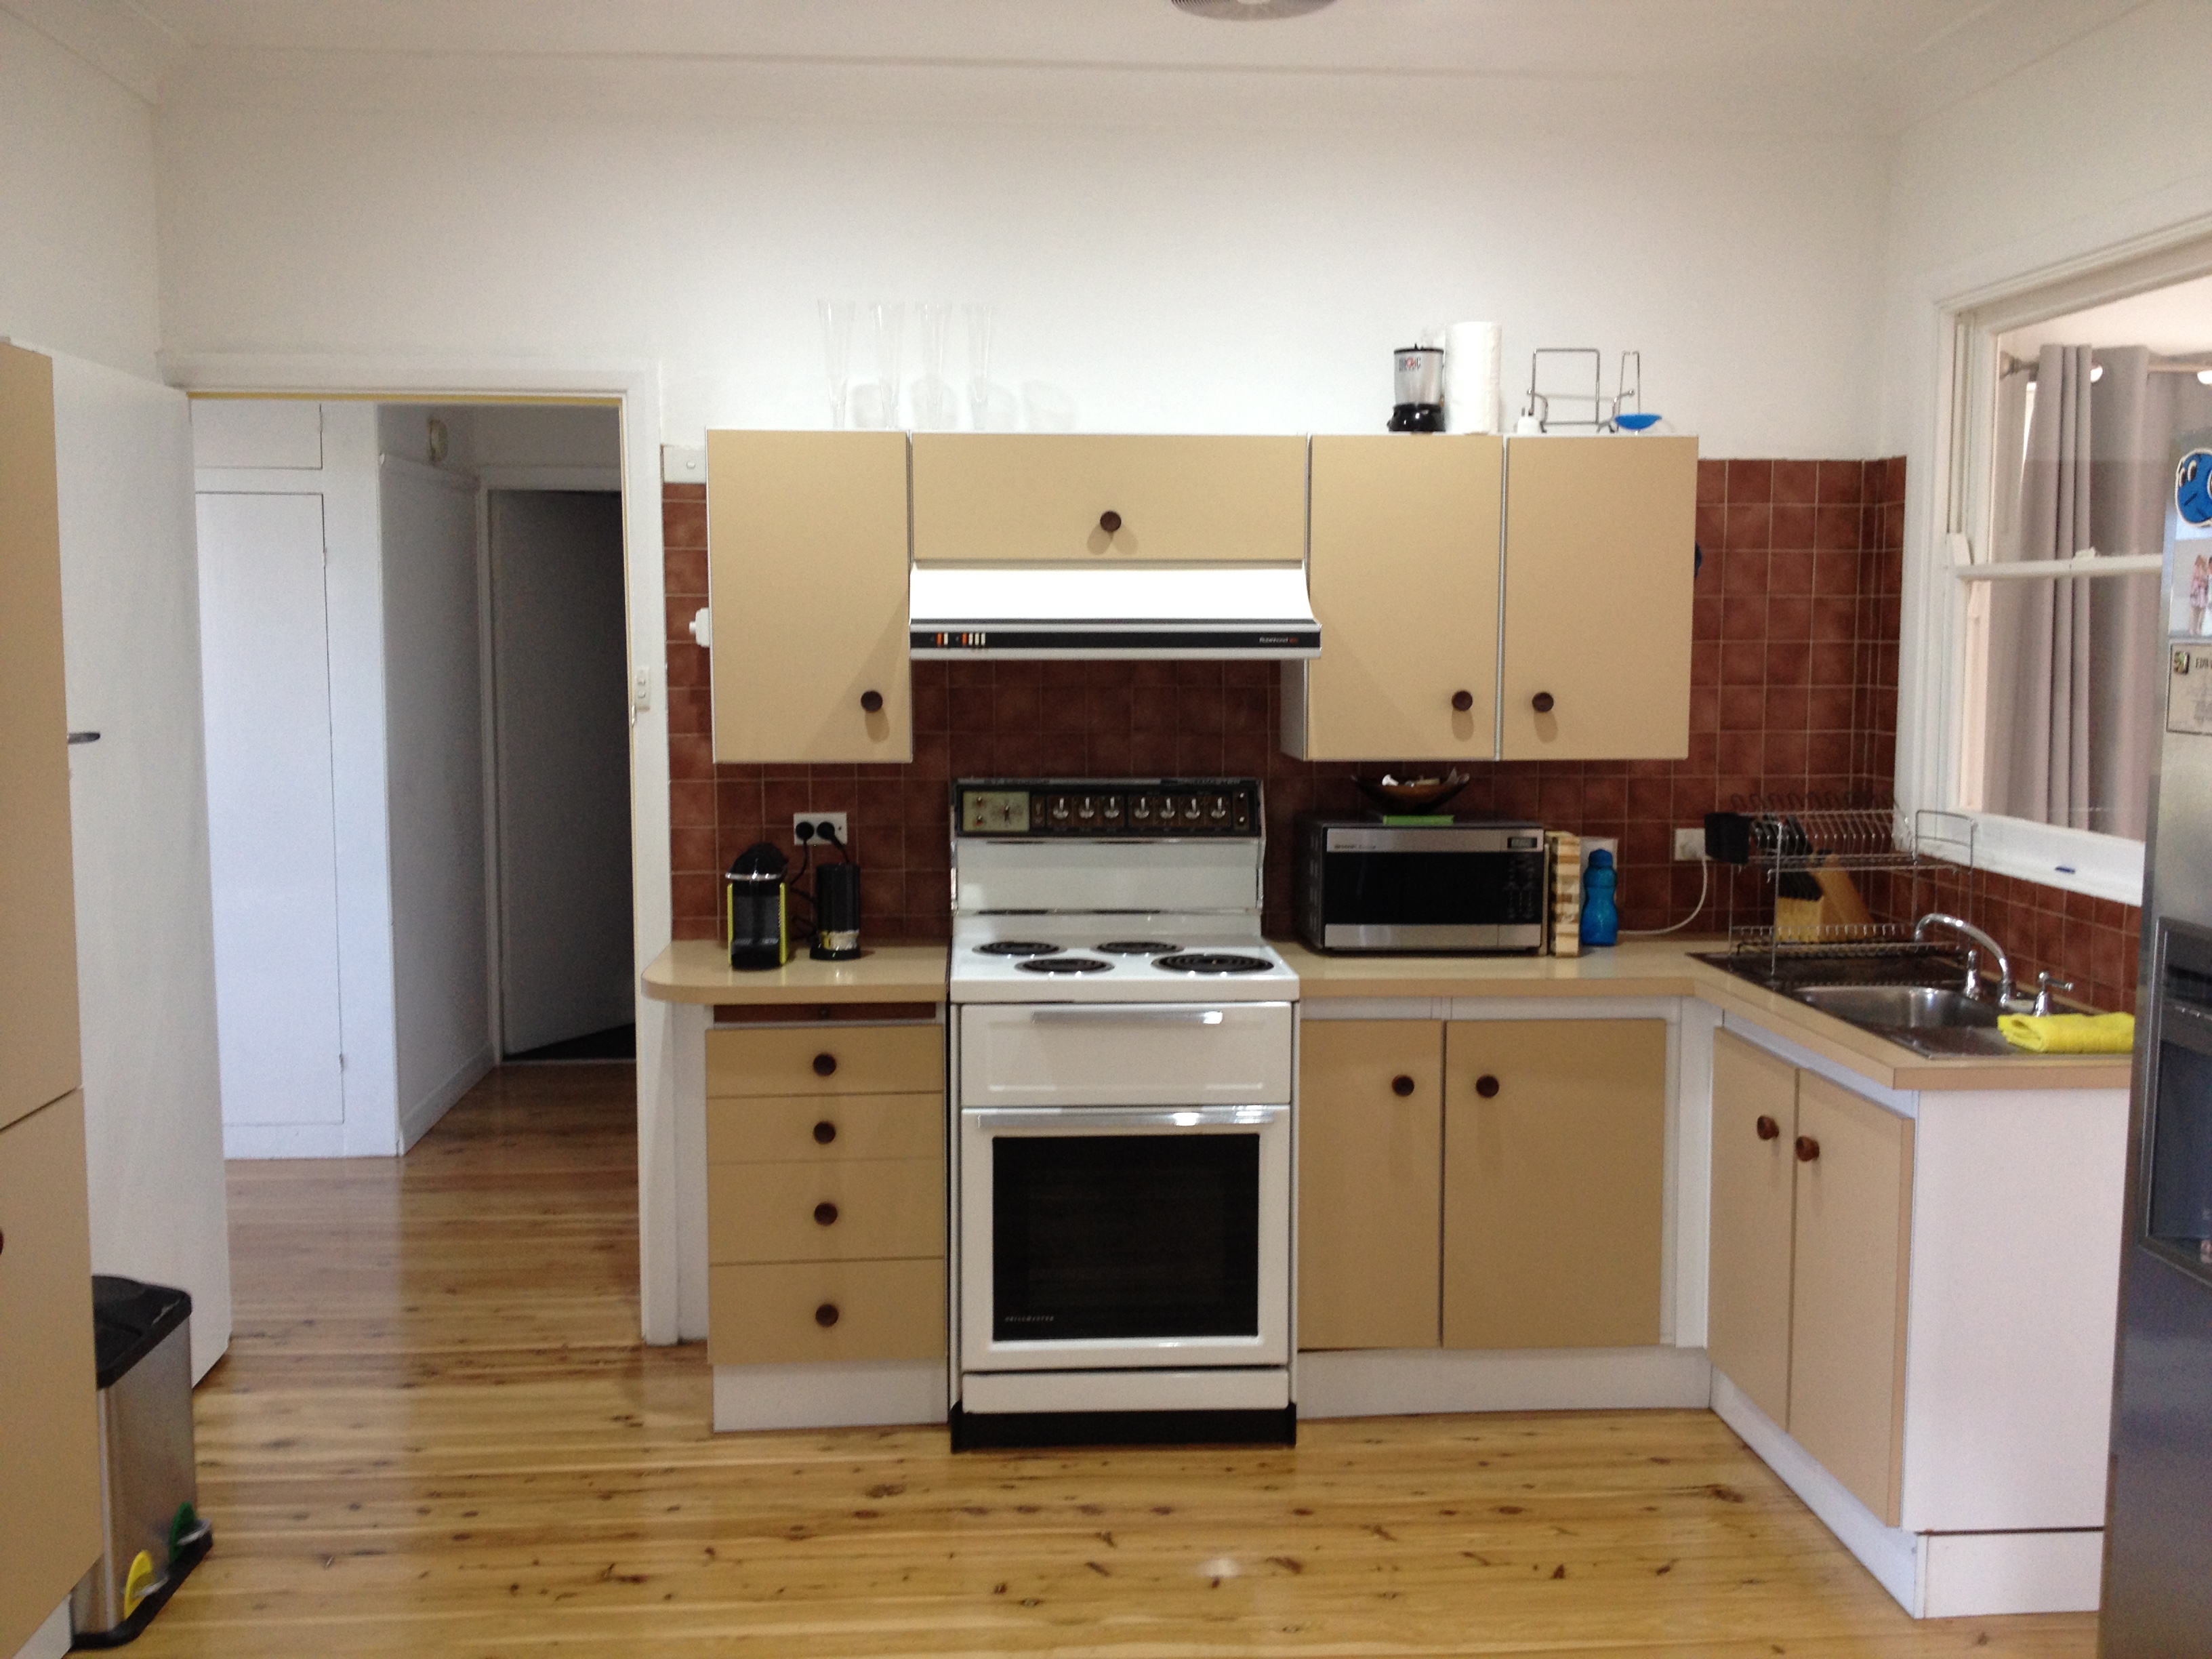 Kitchen renovation project | Bunnings Workshop community